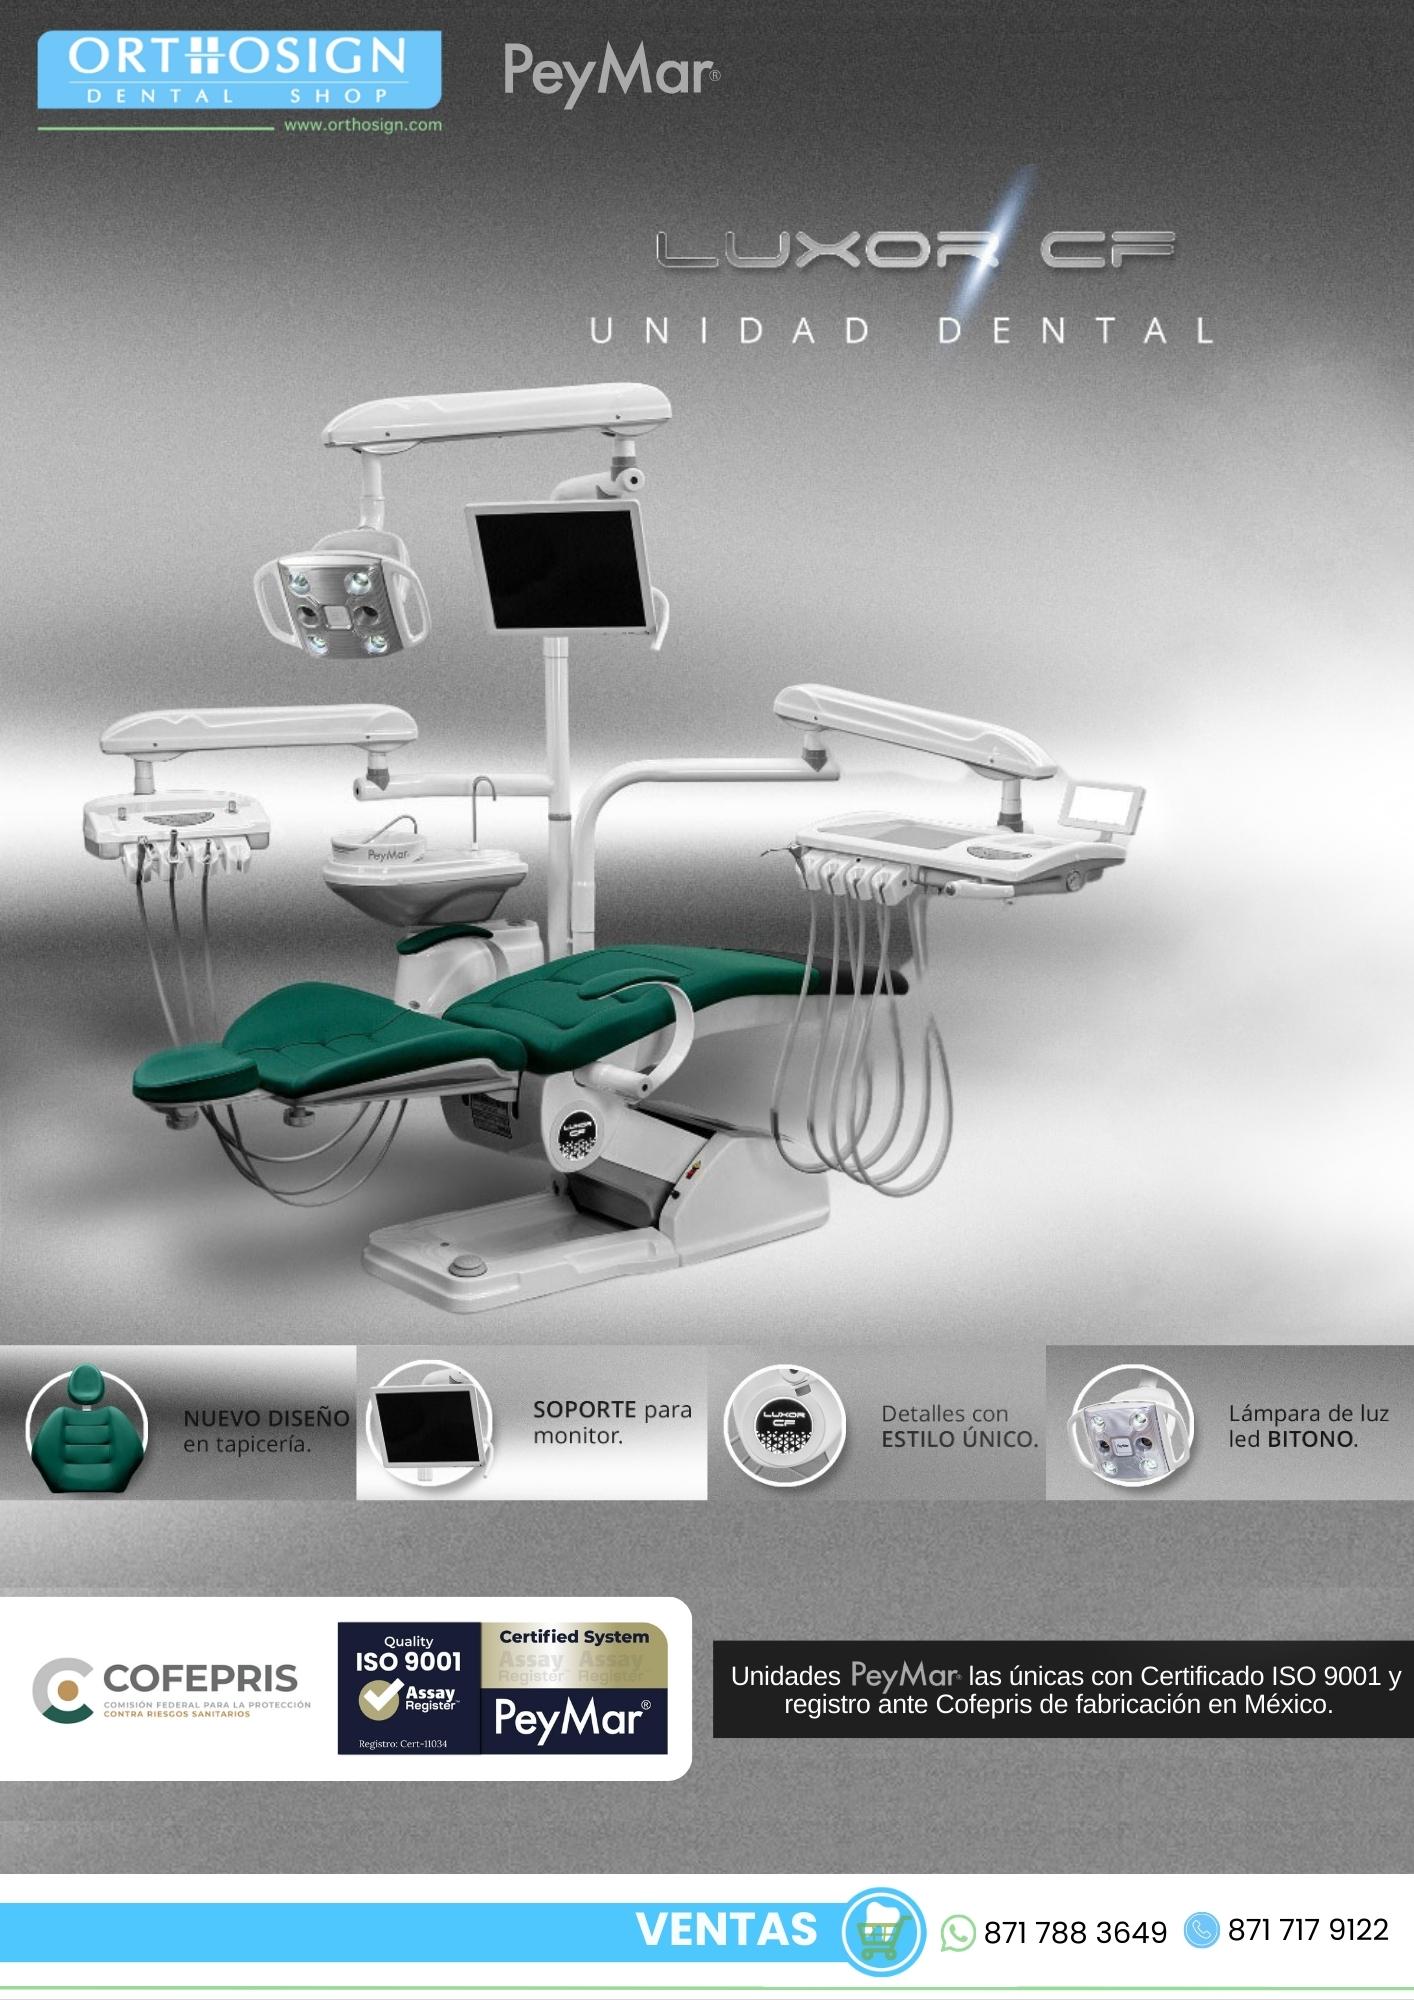 Unidad Dental Eléctrica Luxor CF Equipada Peymar - Catálogo